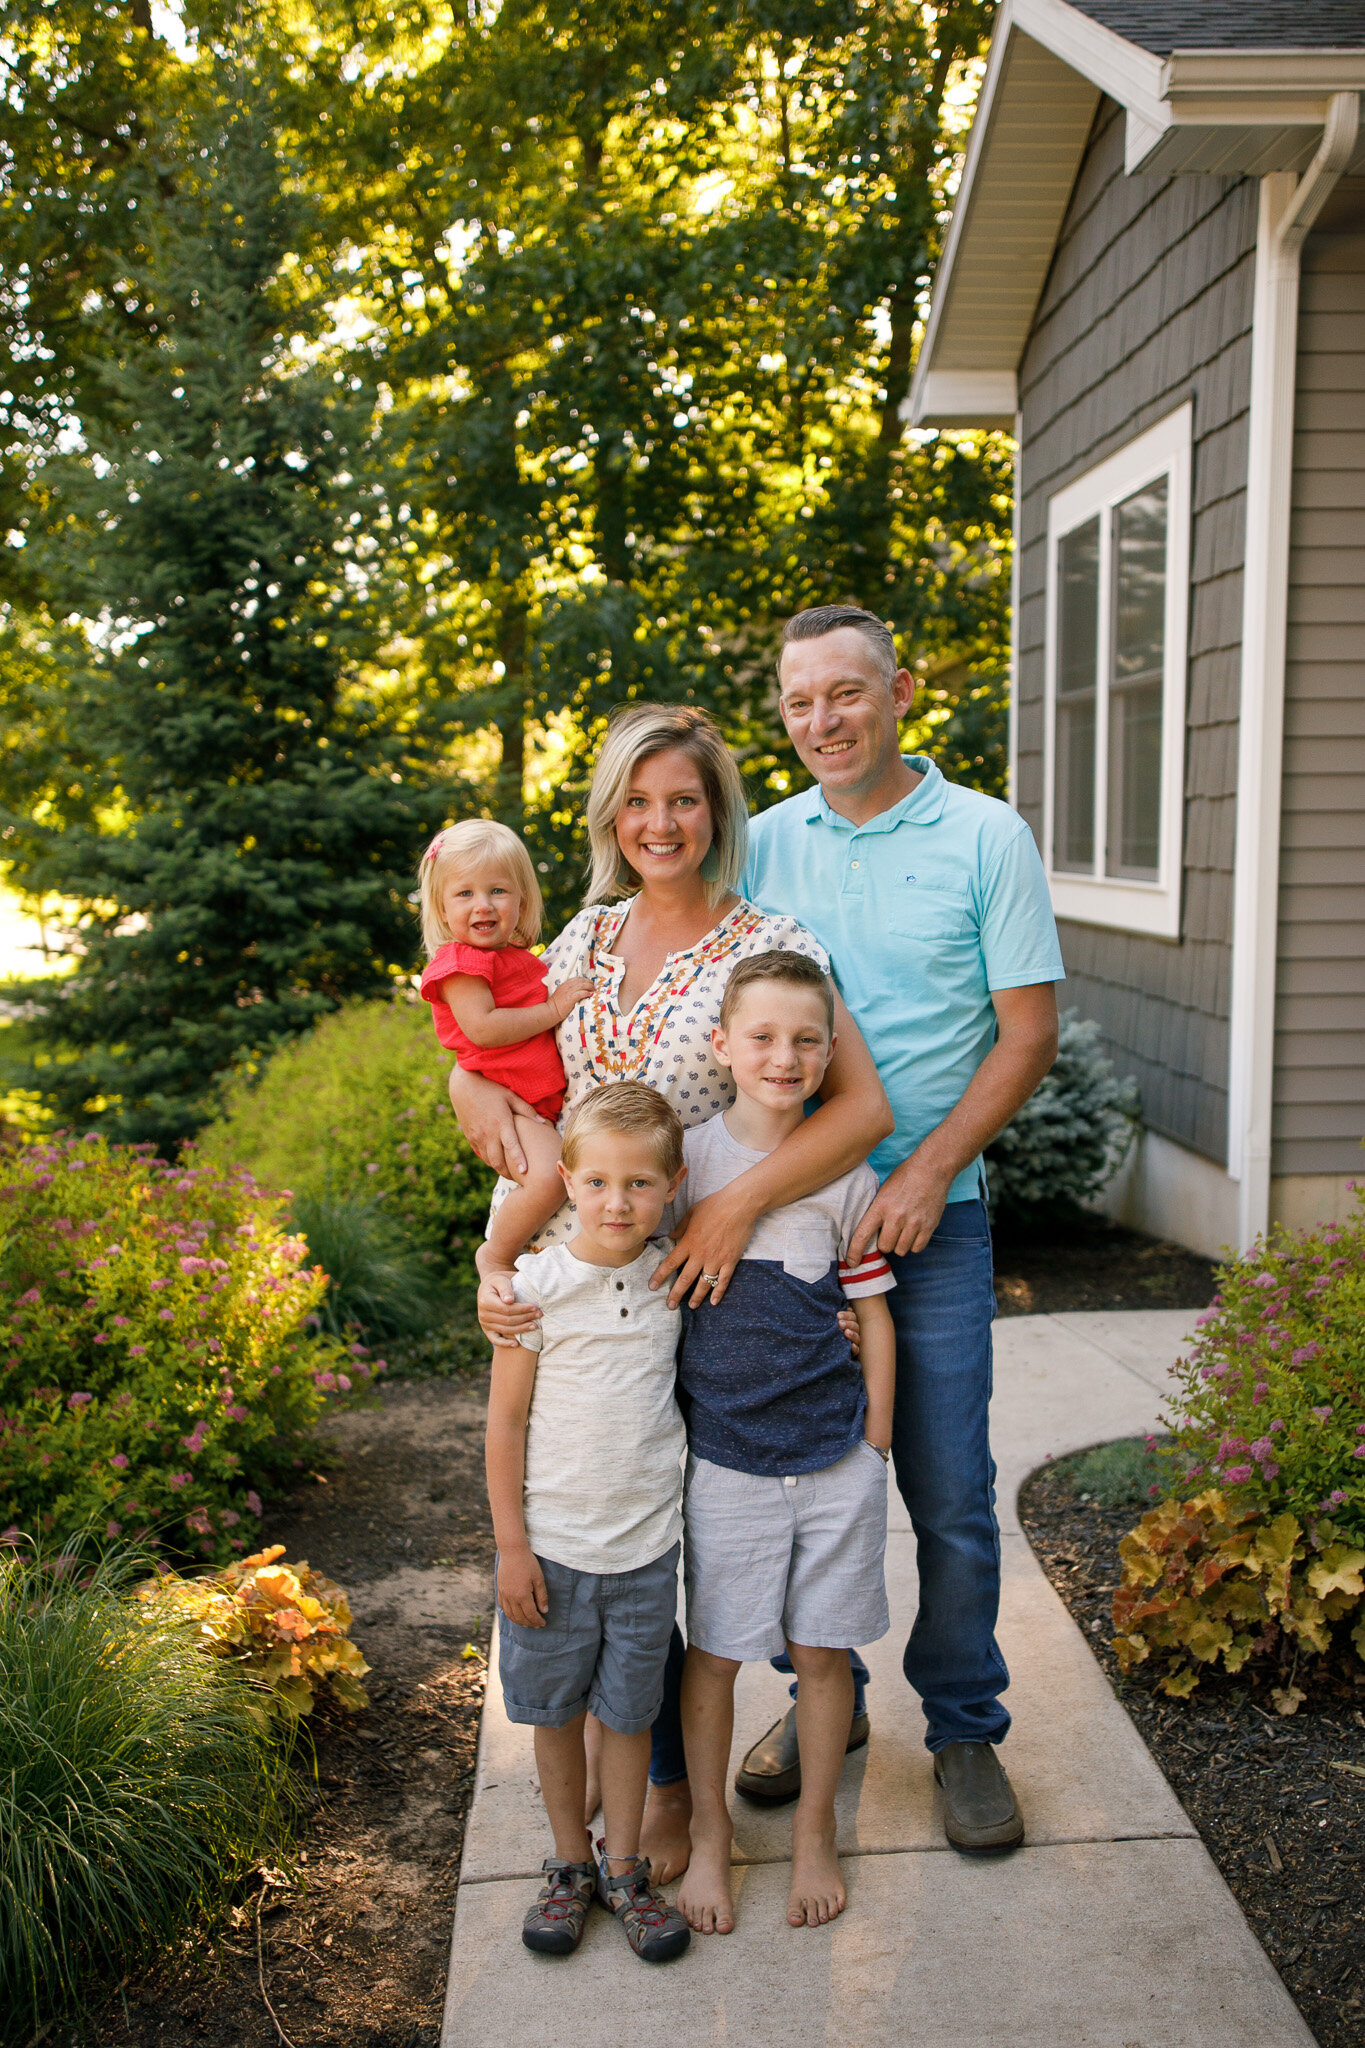 Clabuesch Family - Grand Rapids Family Photographer - Grand Rapids Lifestyle Photographer - Jessica Darling - J Darling Photo009.jpg